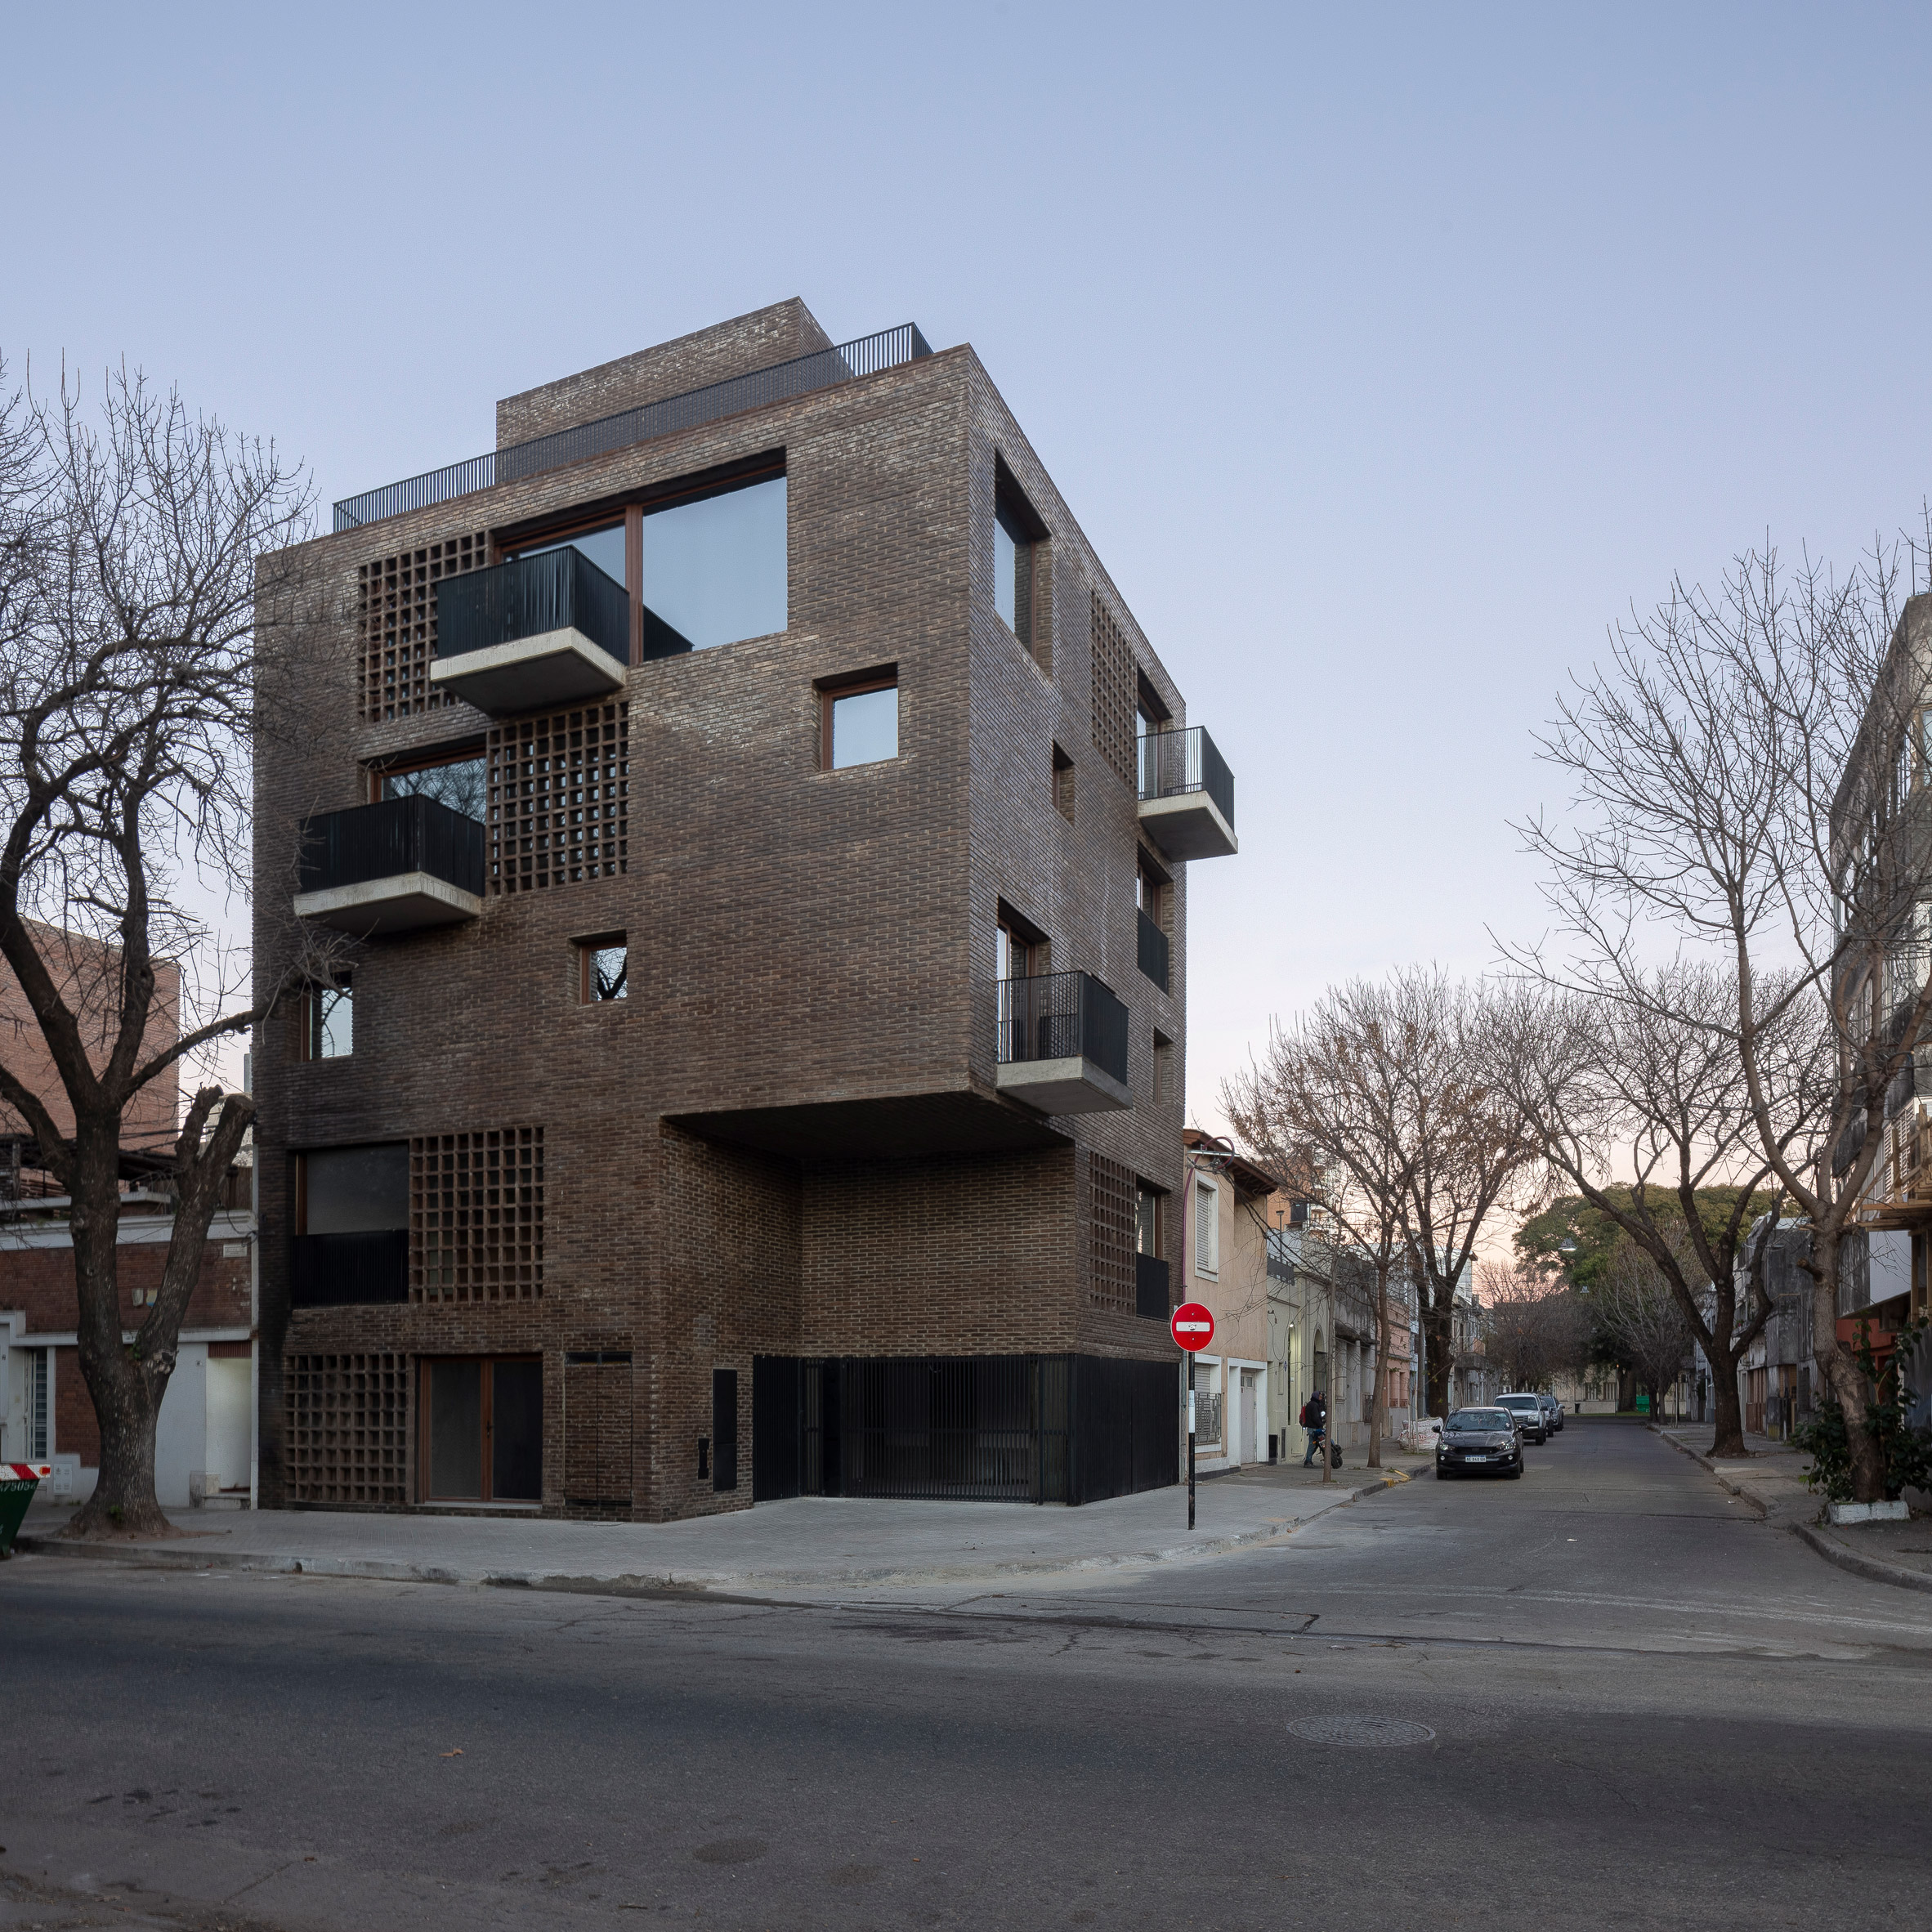 Brick-clad building in Argentina